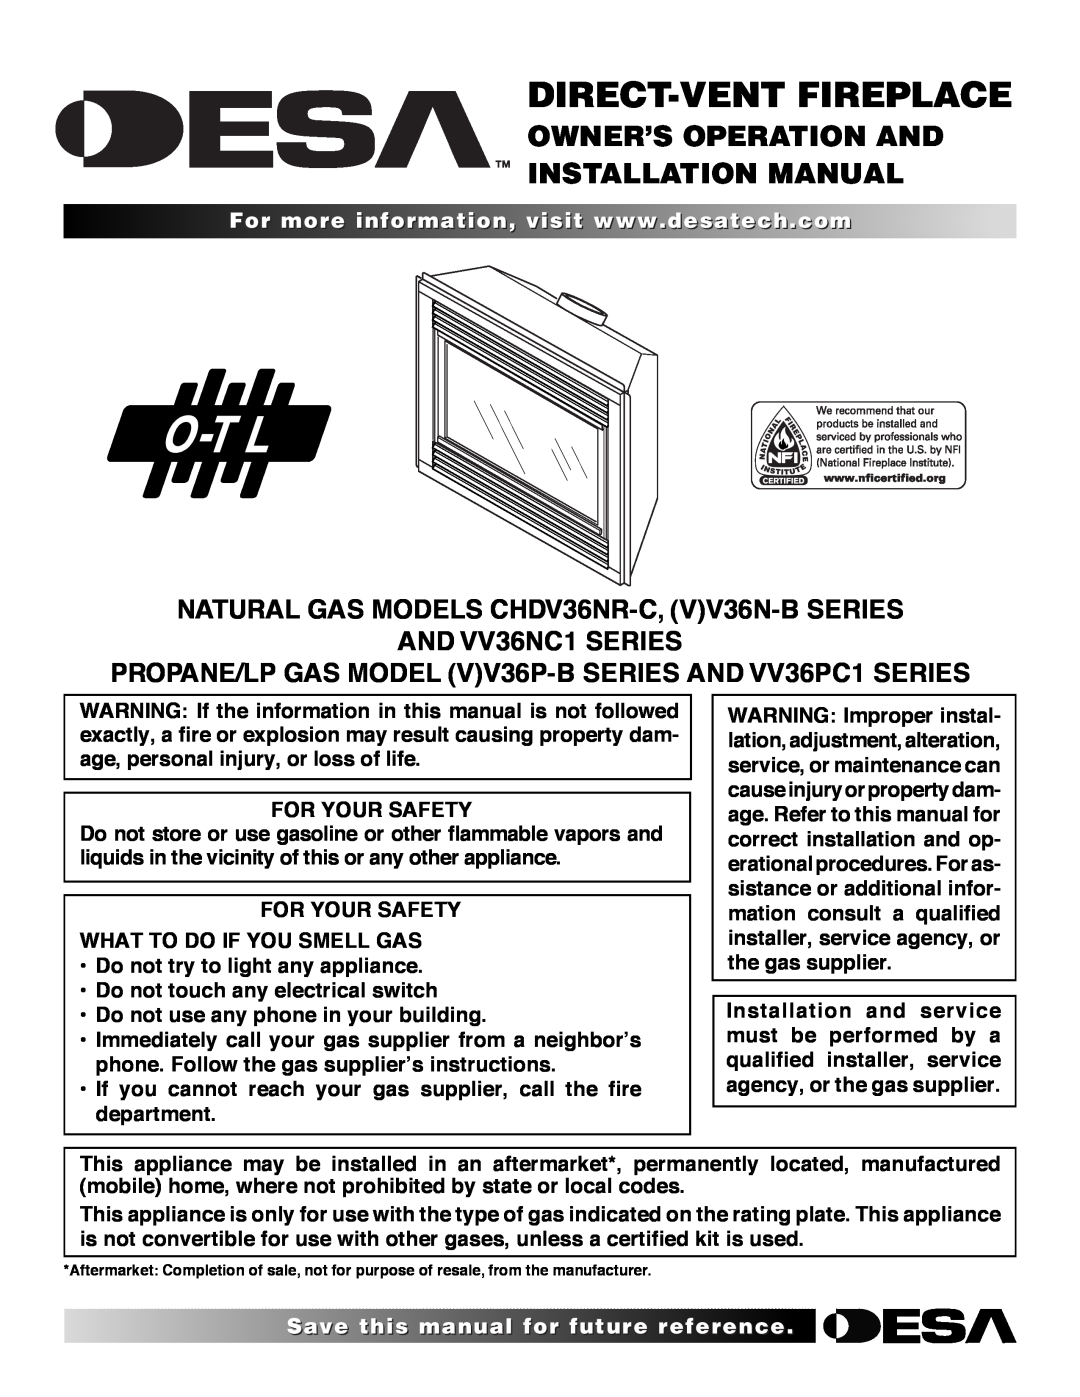 Desa (V)V36P-B SERIES, VV36PC1 SERIES installation manual Owner’S Operation And Installation Manual, For Your Safety 